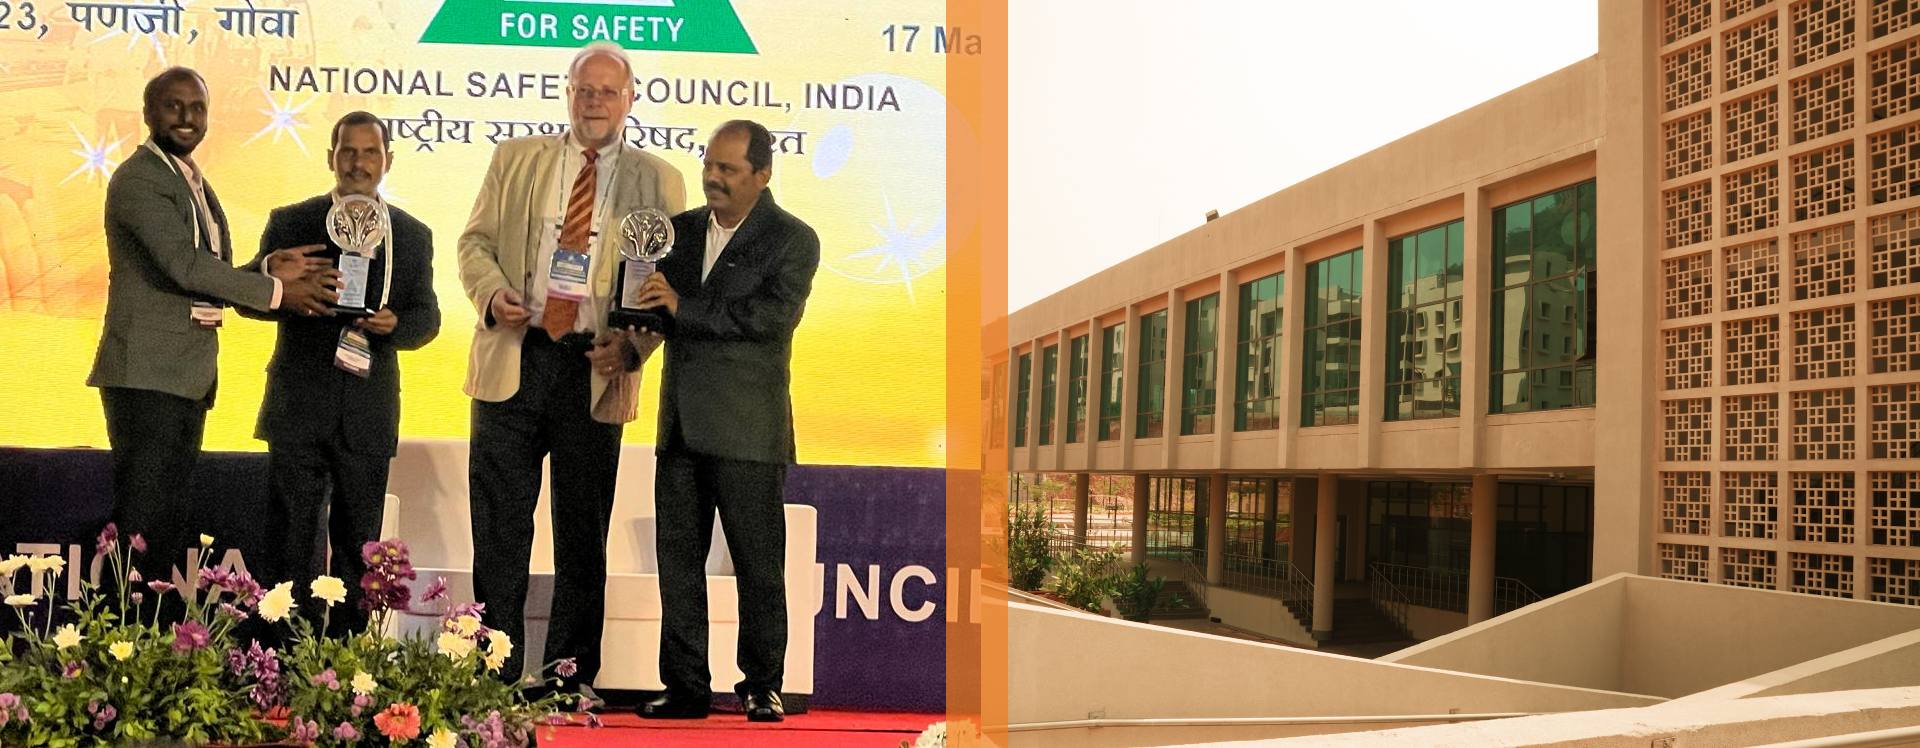 IIM Visakhapatnam Project has won the prestigious NSCI Safety Award Shreshtha Suraksha Puraskar (Silver trophy)